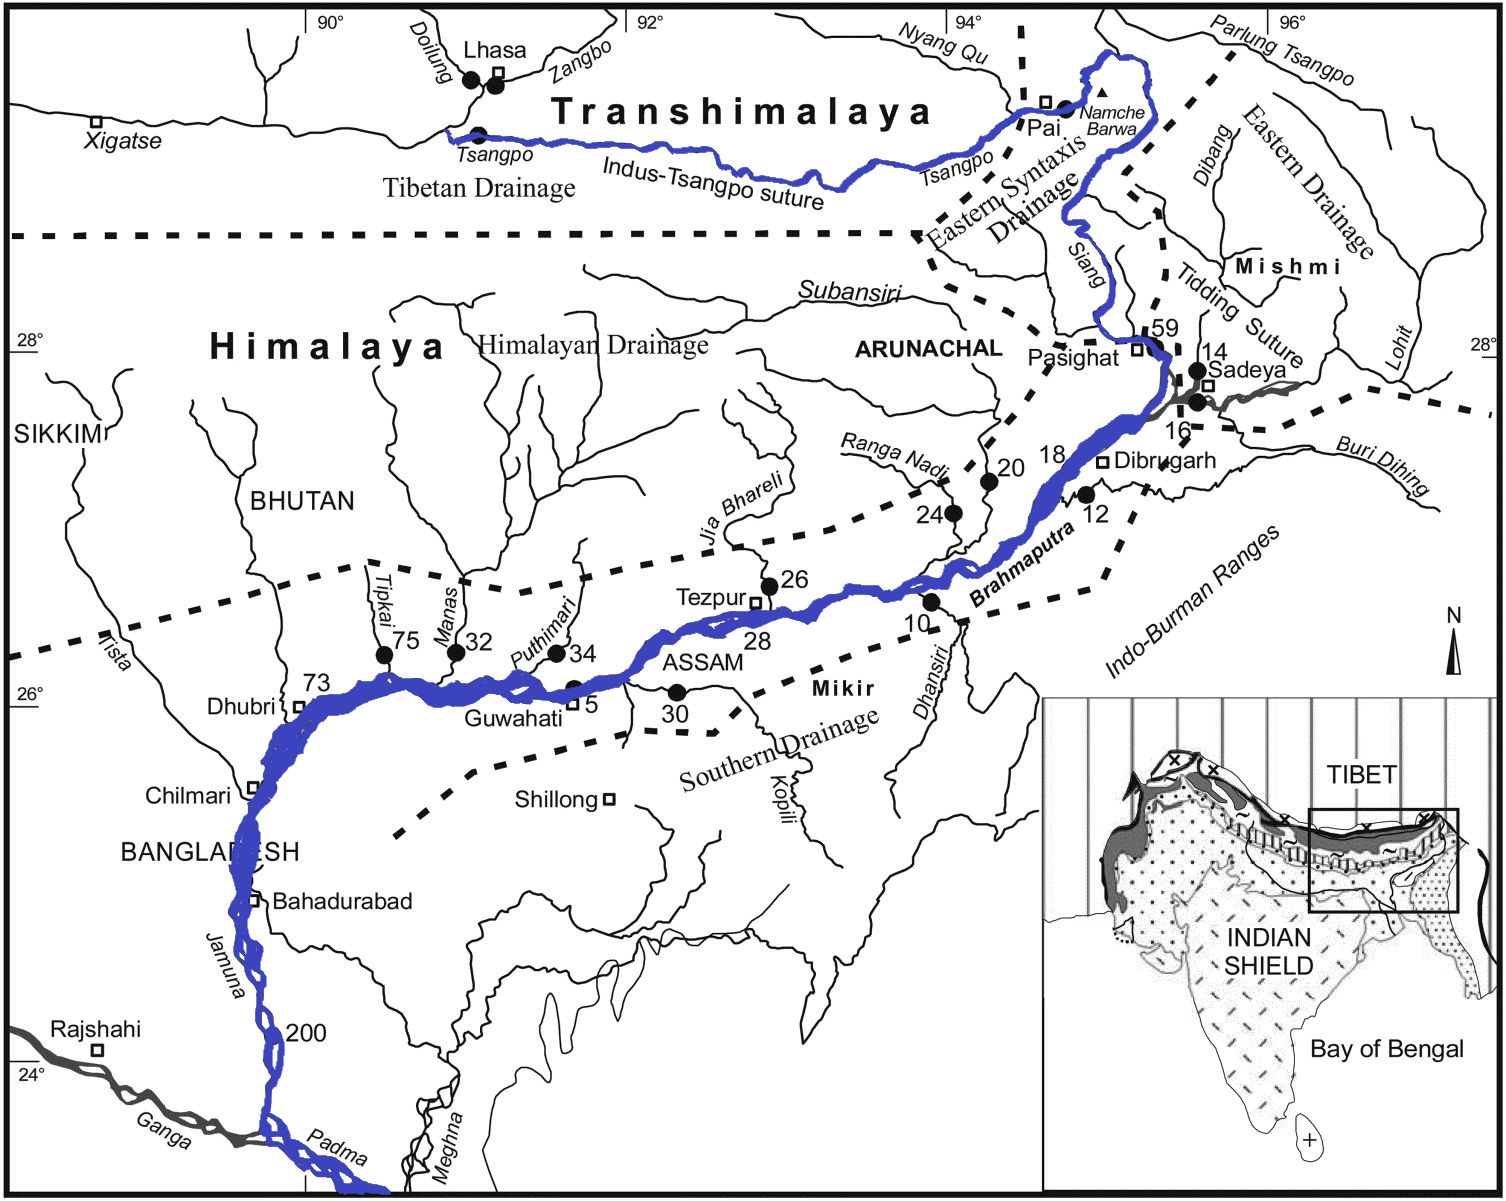 Brahmaputra basin; Source: http://origin-ars.els-cdn.com